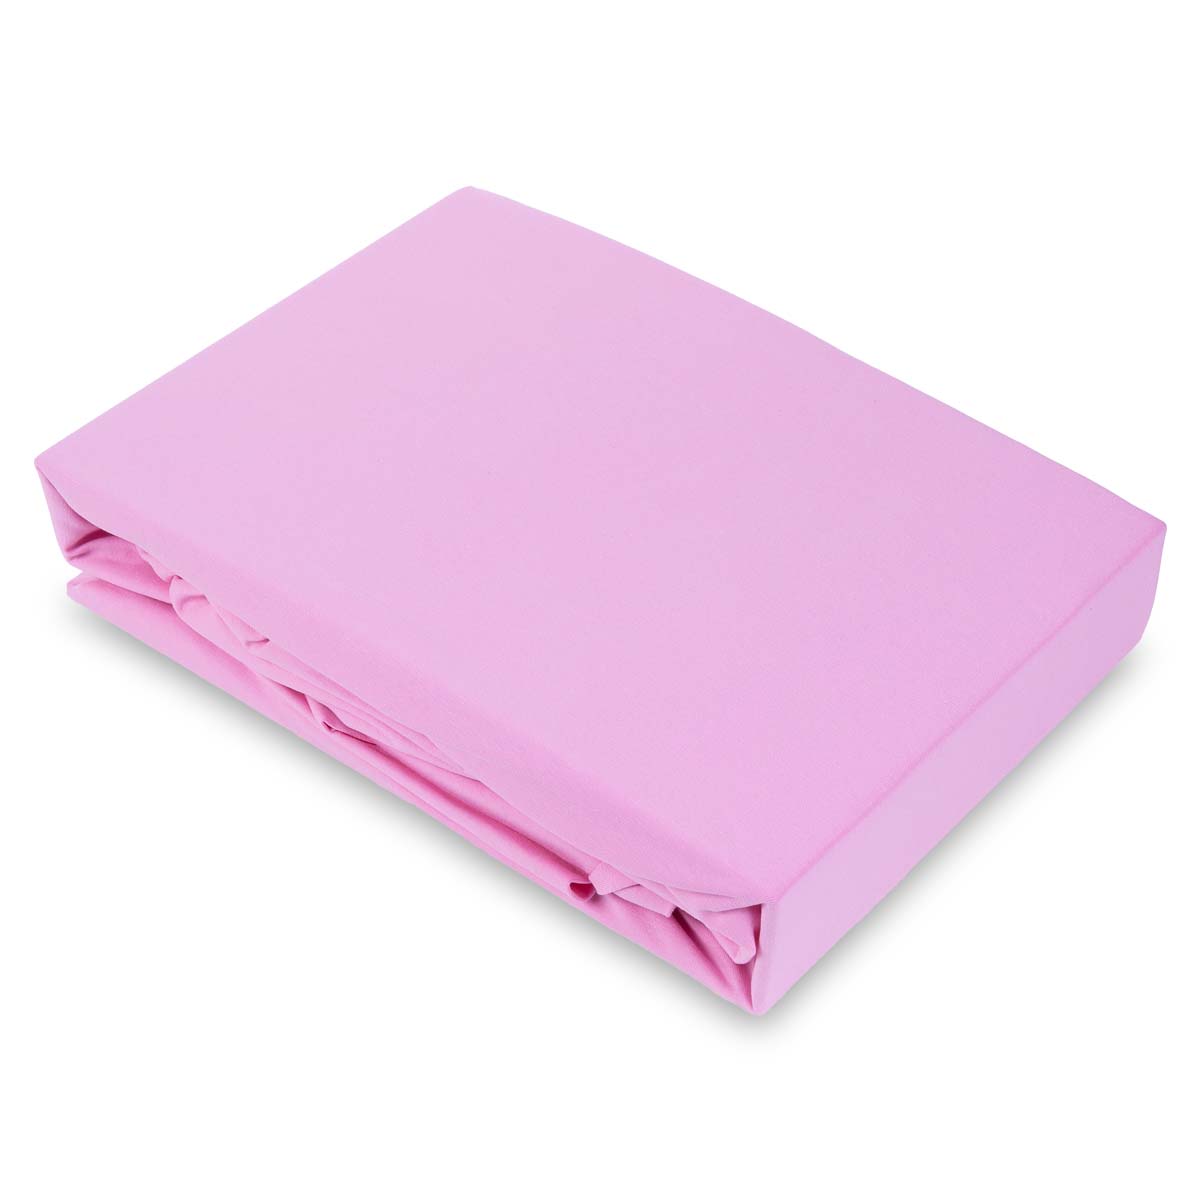 Простыня натяжная 2-спальная Pappel 180x220см, цвет розовый Pappel 180220-35/Pink 11 180220-35/Pink 11 - фото 1